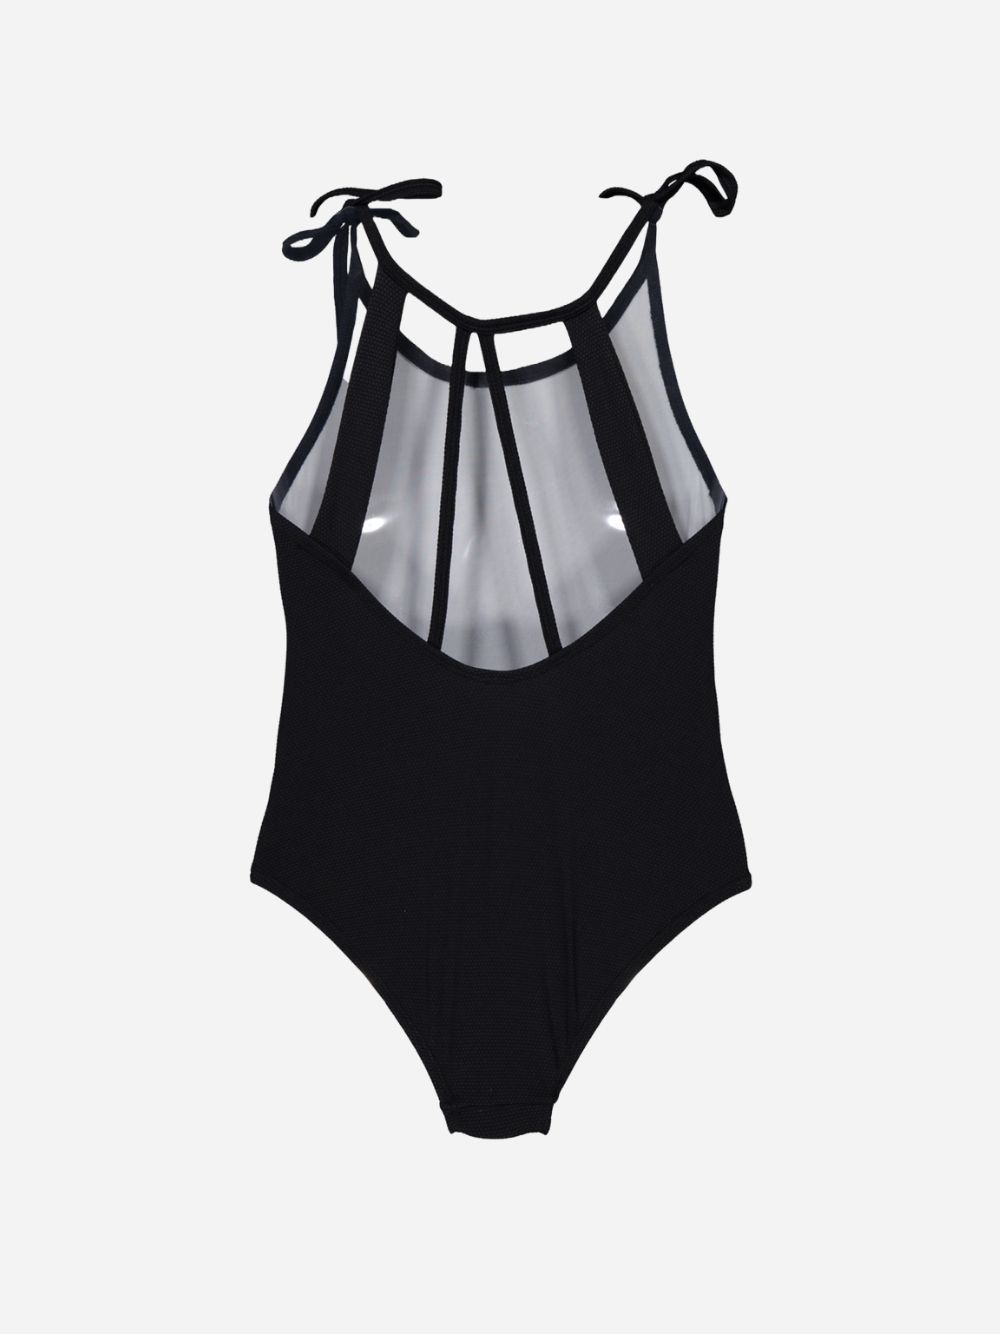 Textured black swimsuit